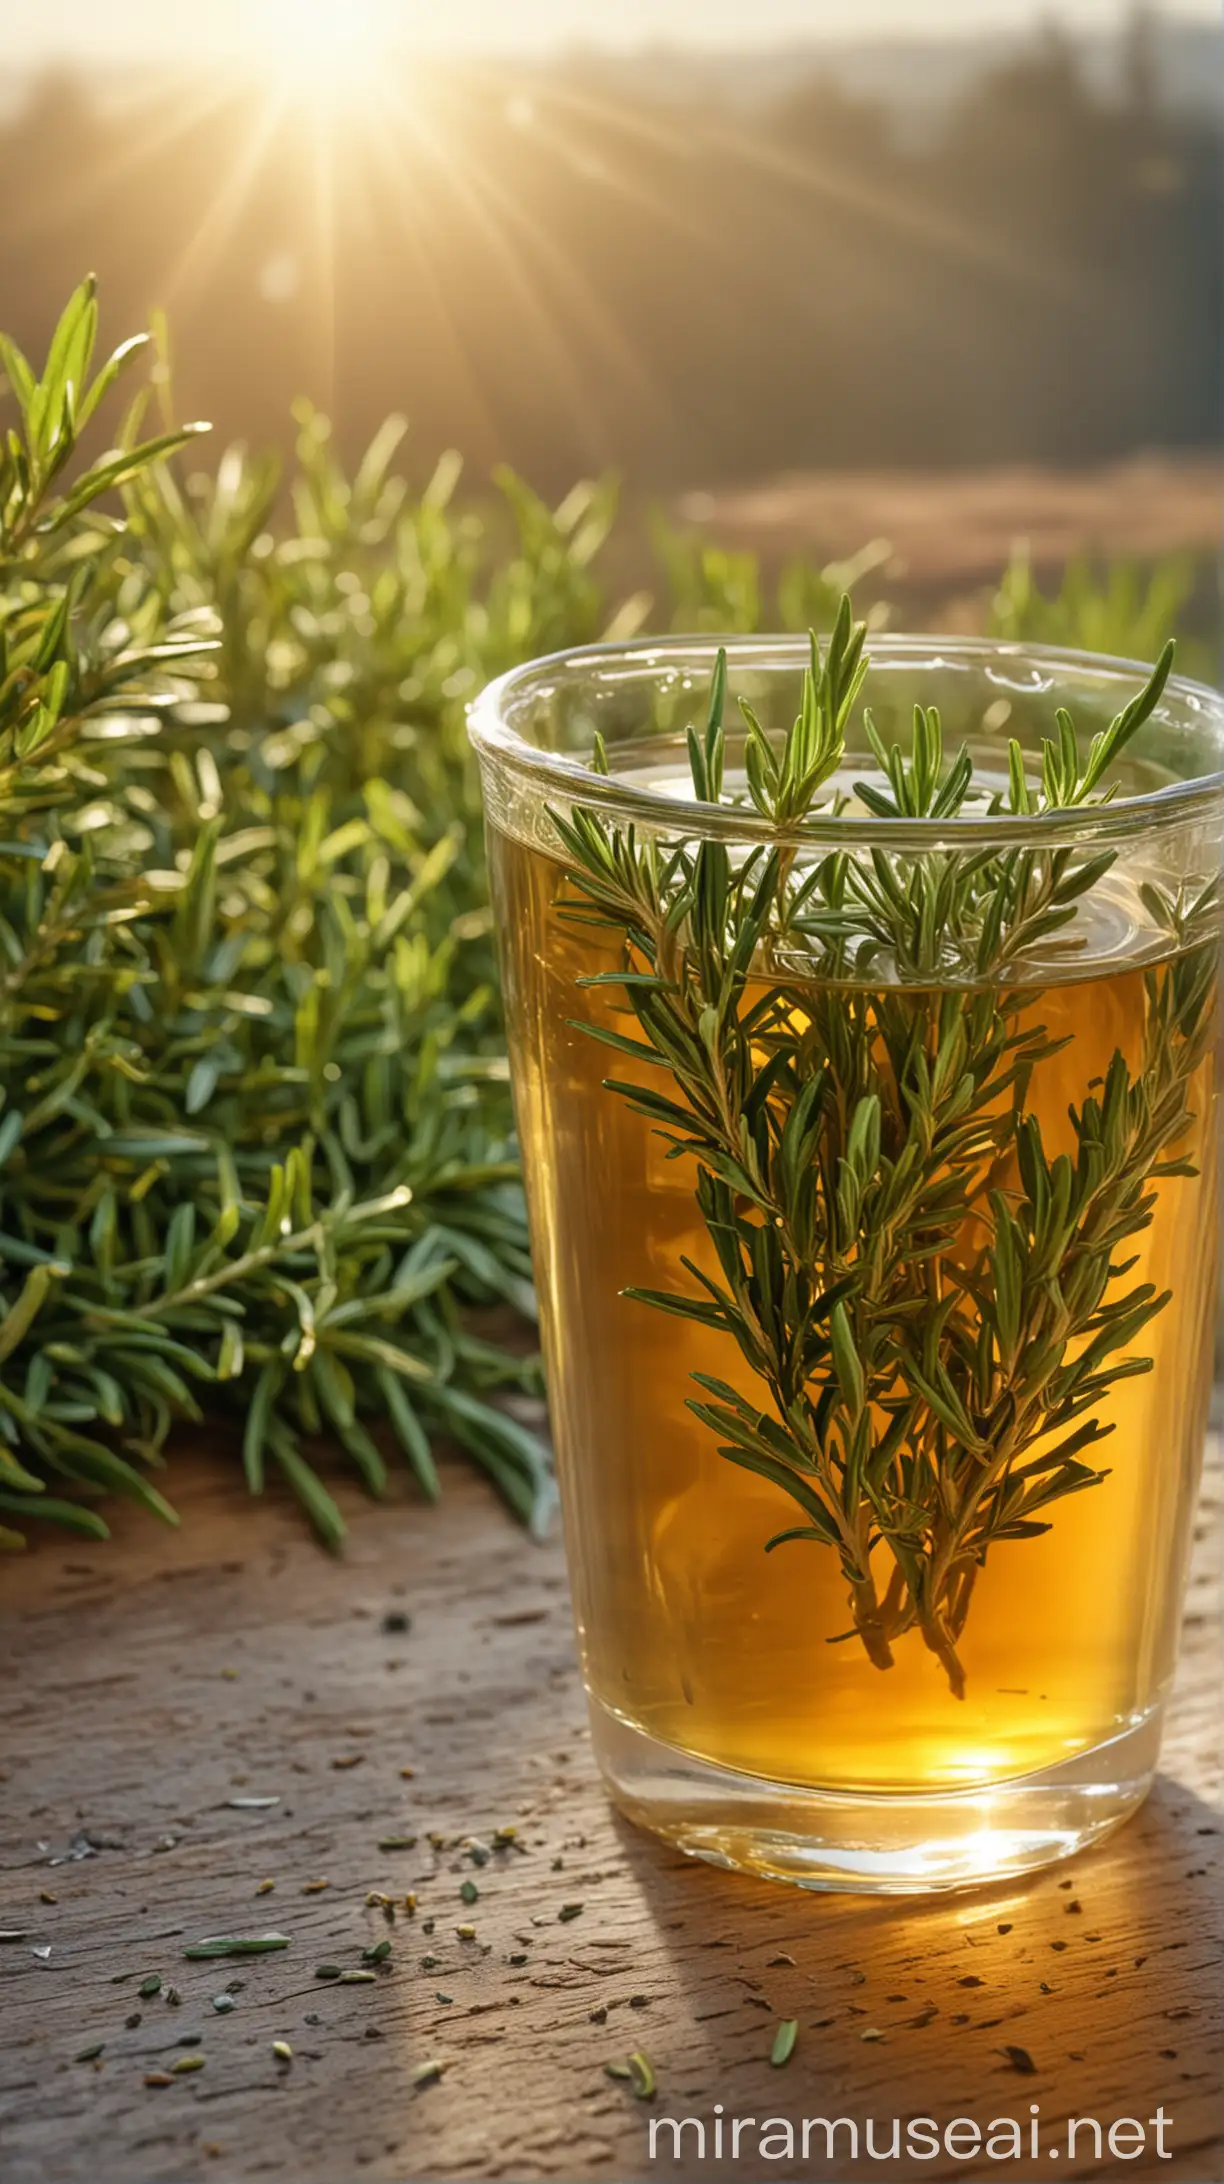 Refreshing Rosemary Tea in Natural Sunlight Morning Time 4K HDR Image